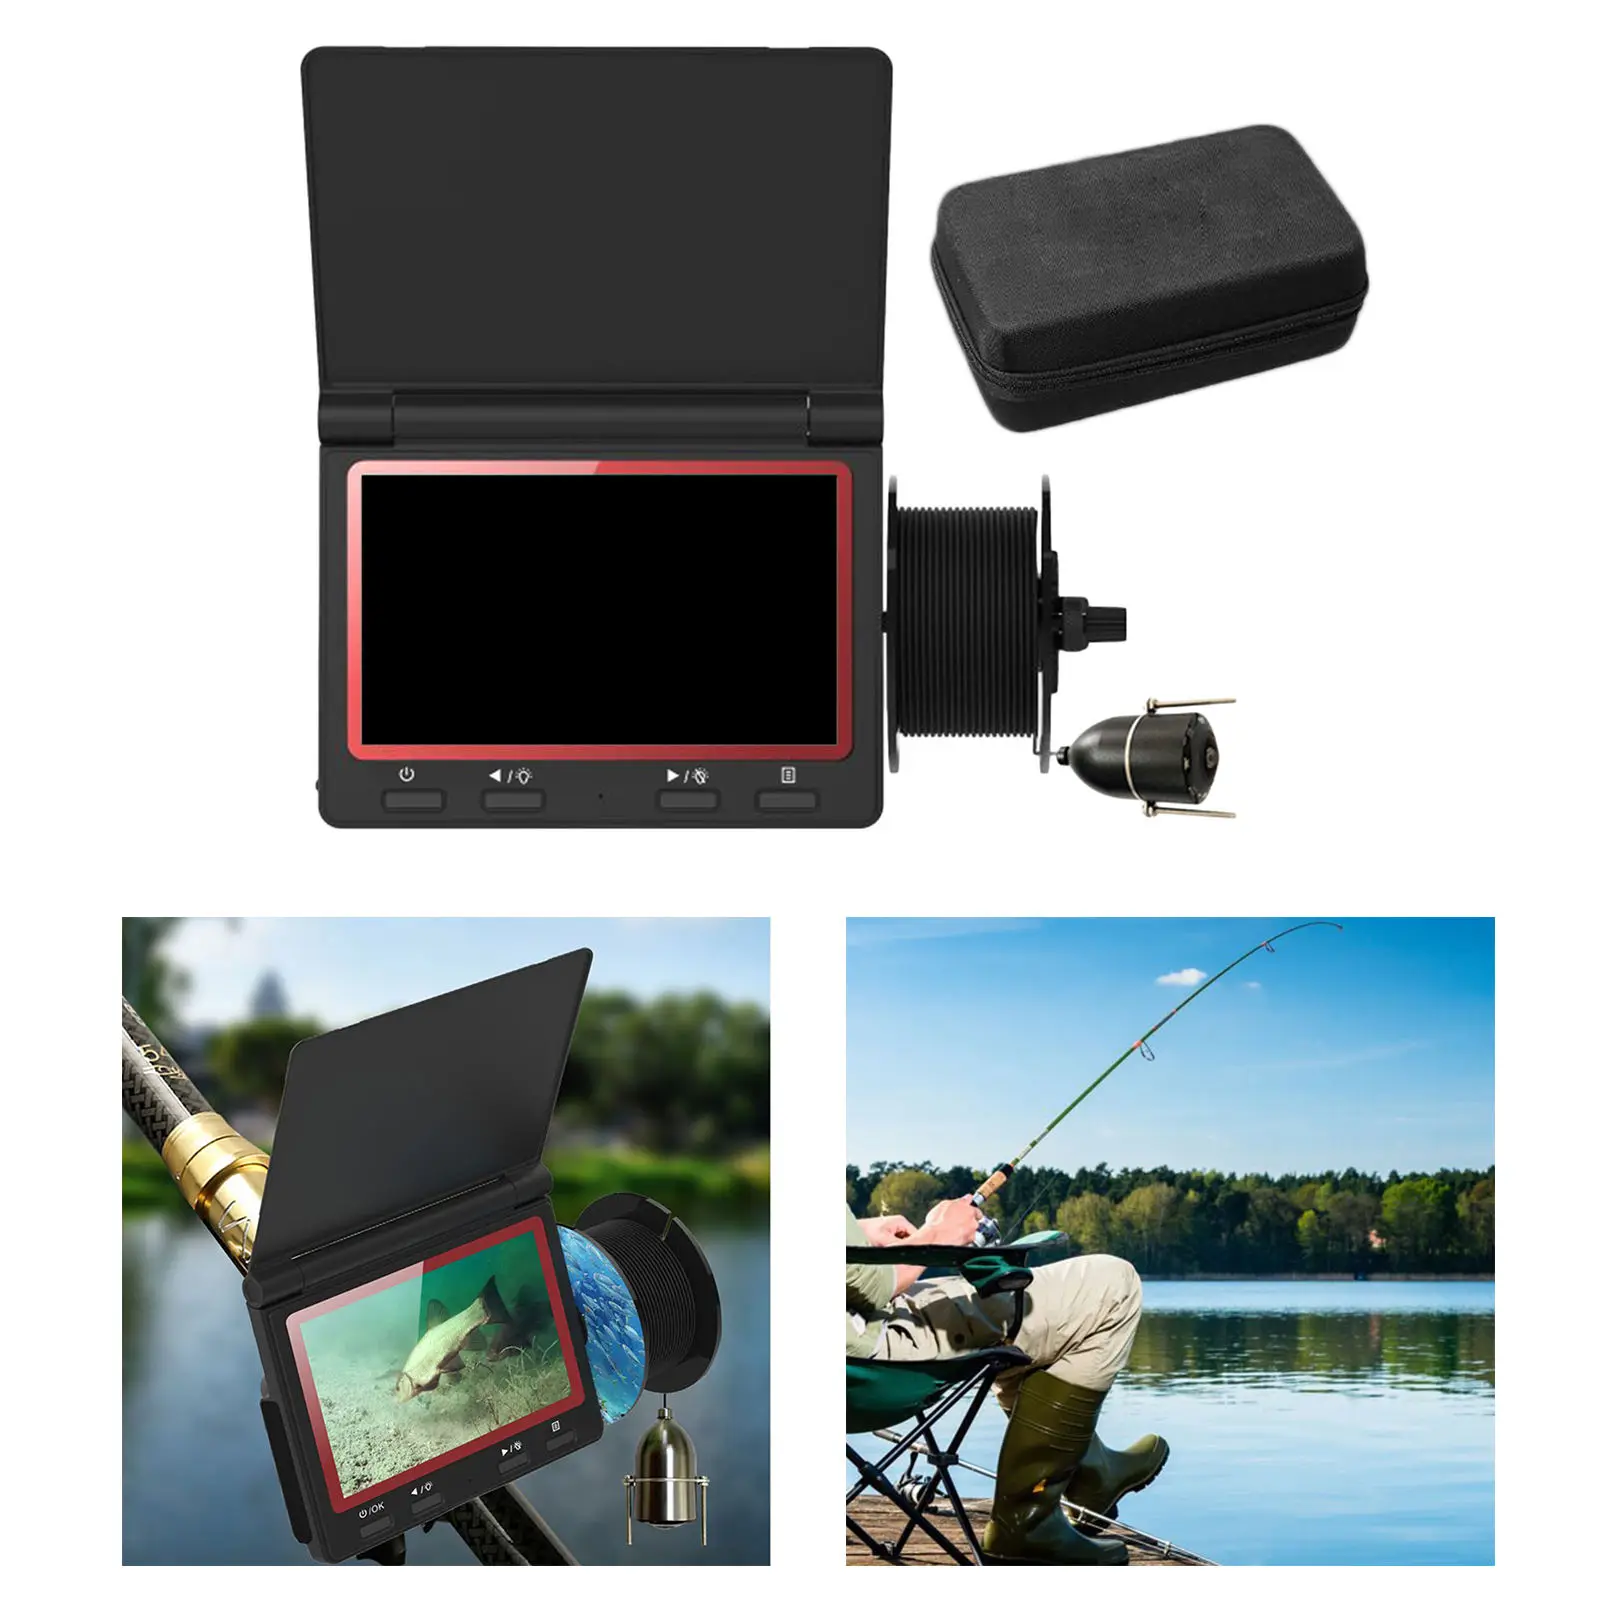 Underwater Fishing Camera IP68 Waterproof 30M Cable LCD Monitor Fish Finder for Ice Lake Kayak Sea Boat Fishing